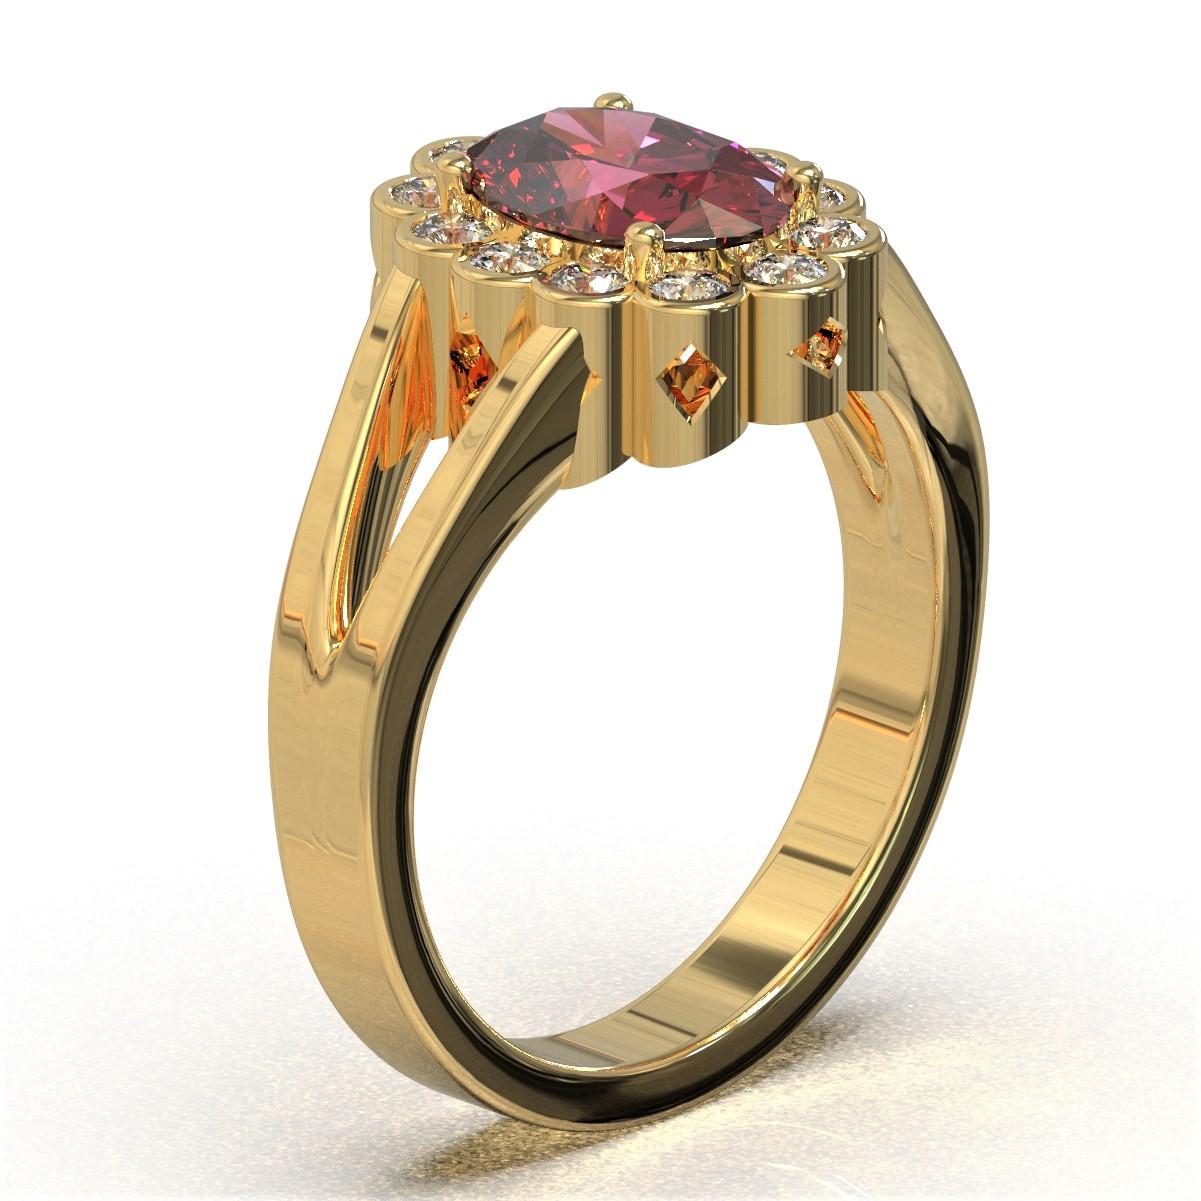 Art Deco Kian Design 2.03 Carat Oval Rhodolite Diamonds Cocktail Ring in 18 Carat Gold